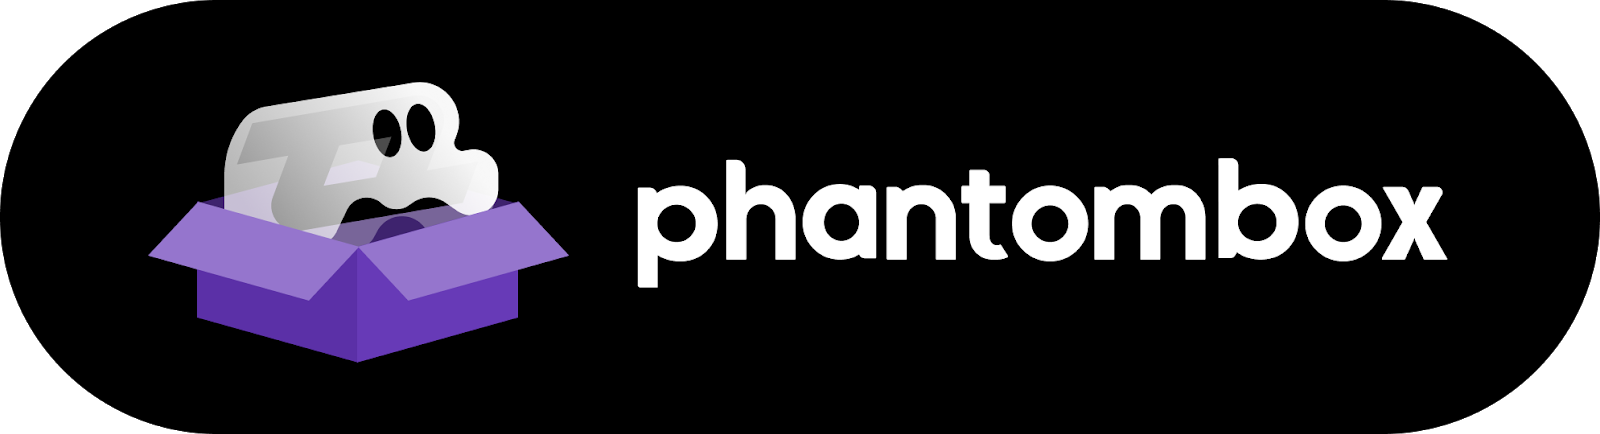 Phantom box is our own Design tokens CI